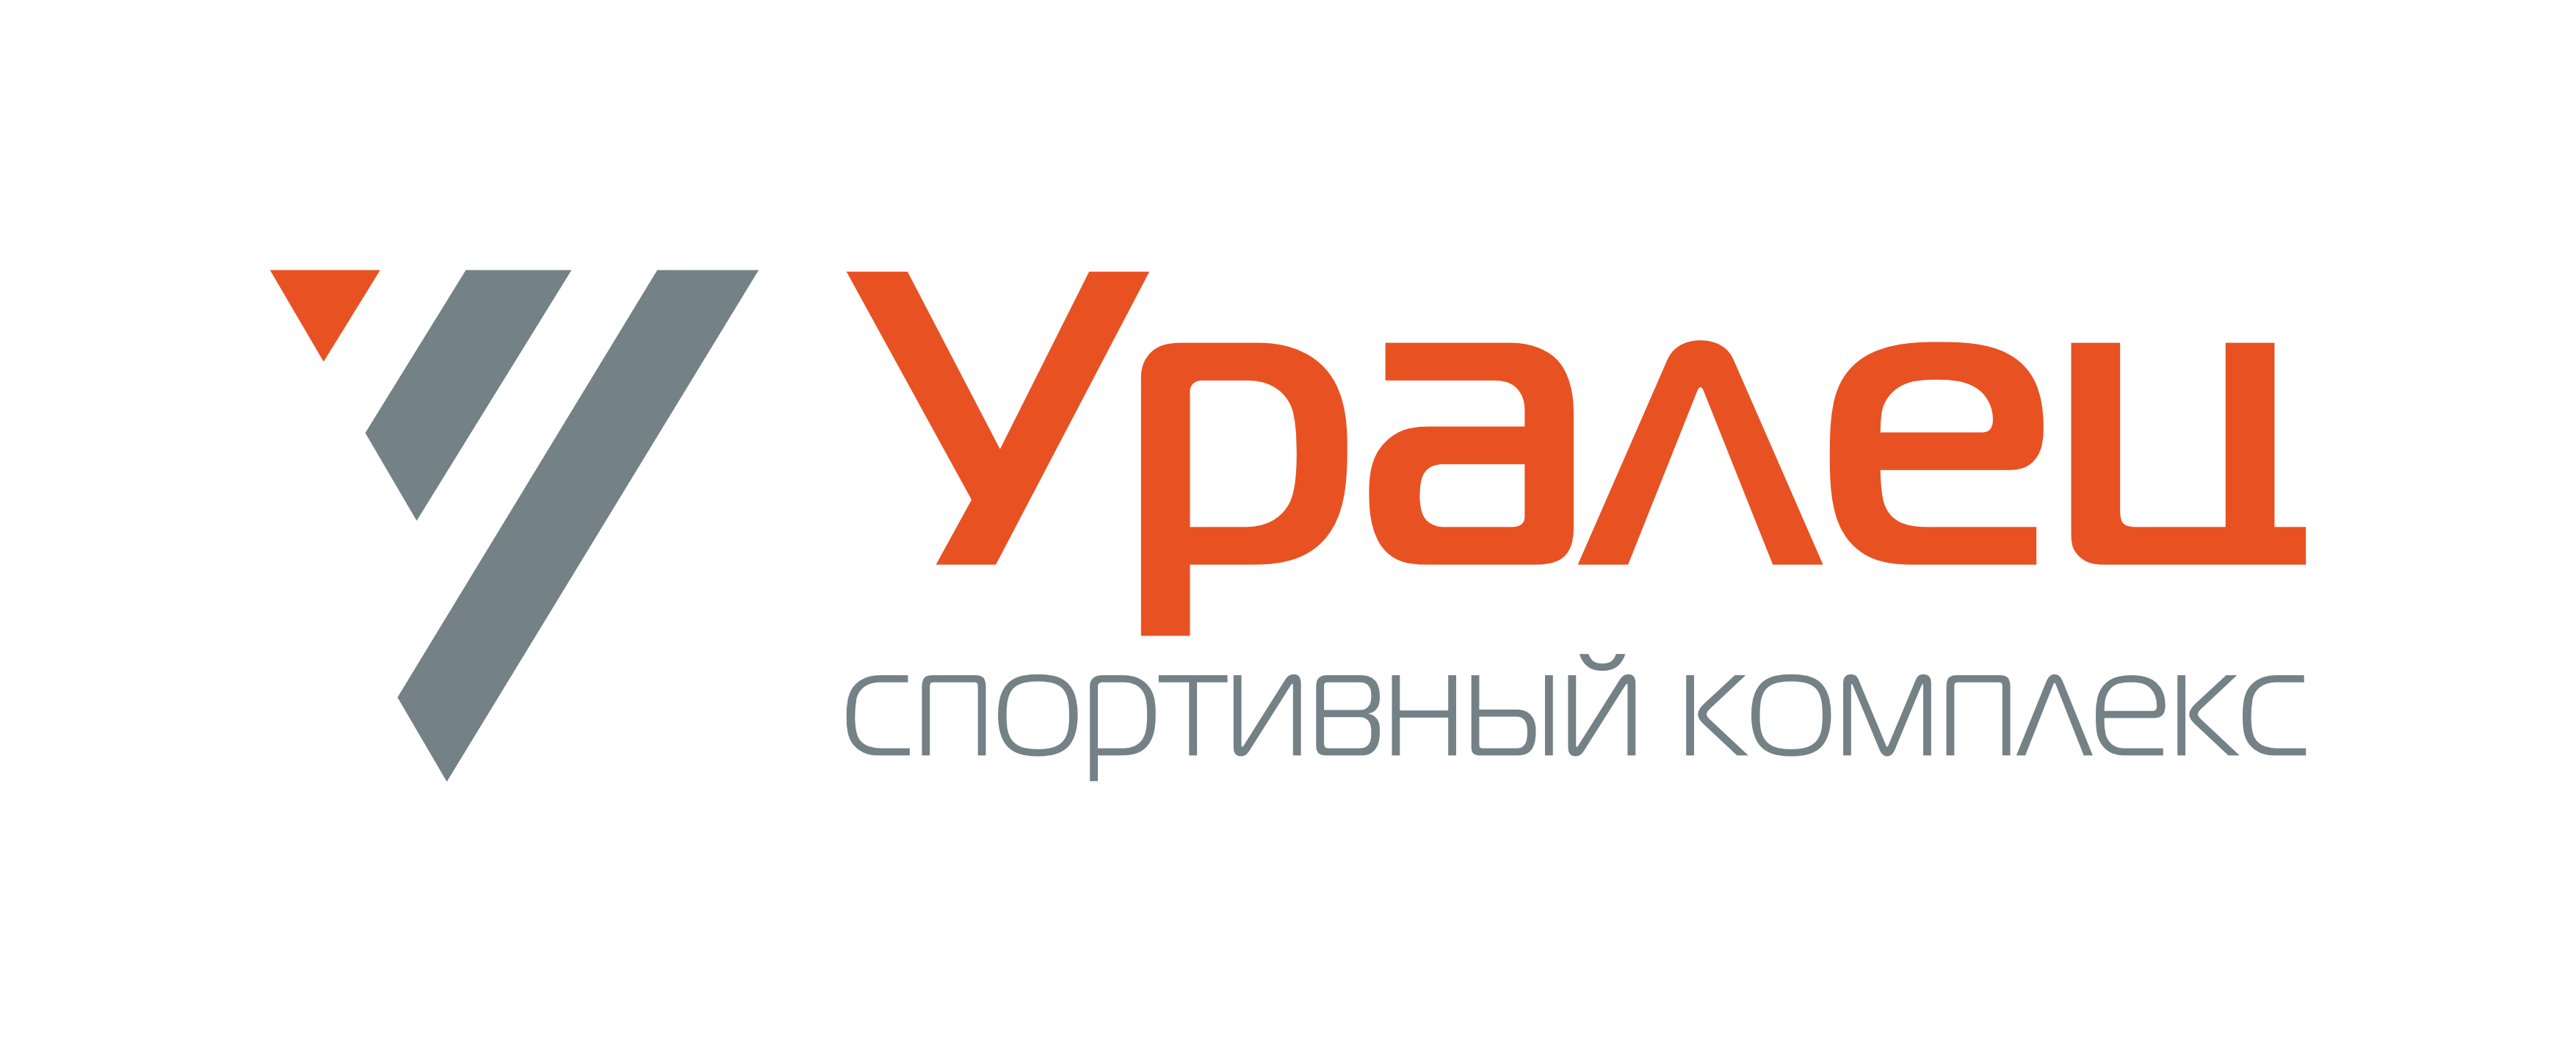 Лого: Конно-спортивный комплекс «Уралец»